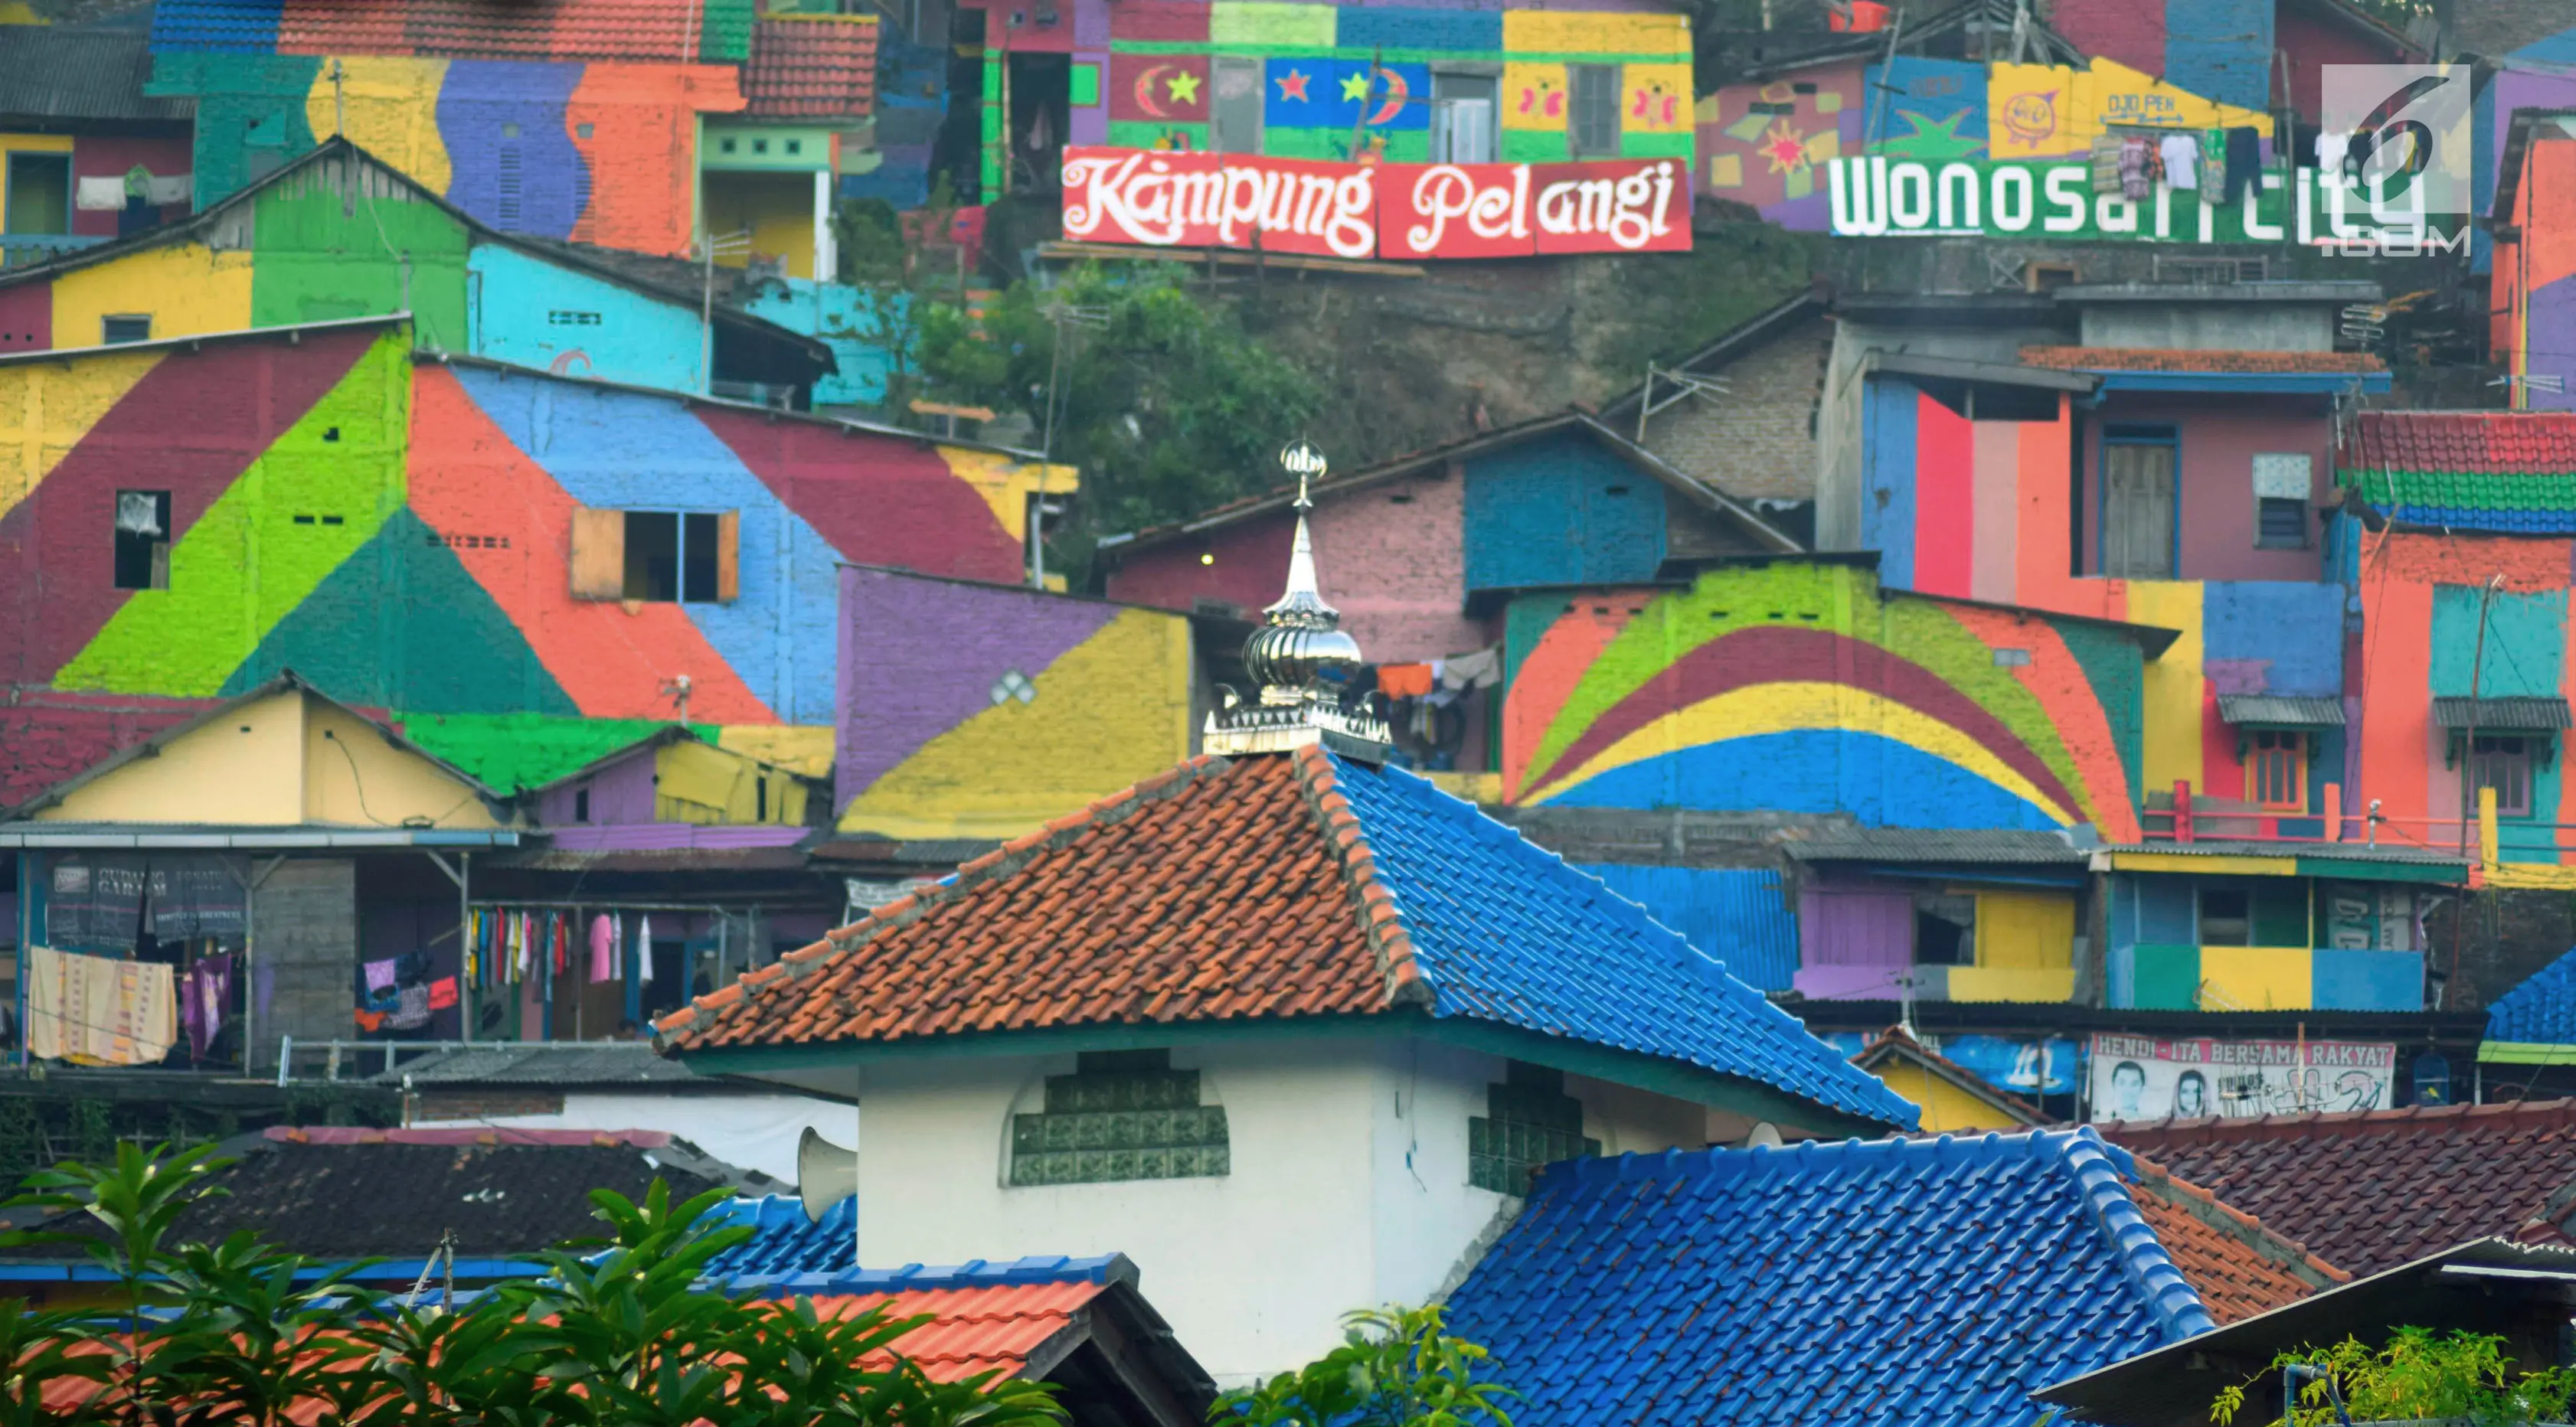 Pemandangan Kampung Wonosari yang terlihat warna-warni di Randusari, Semarang (24/5). Banyak wisatawan lokal, nasional hingga internasional terpesona dengan keindahan seni kreatif di berbagai sudut Kampung Pelangi ini. (Liputan6.com/Gholib)